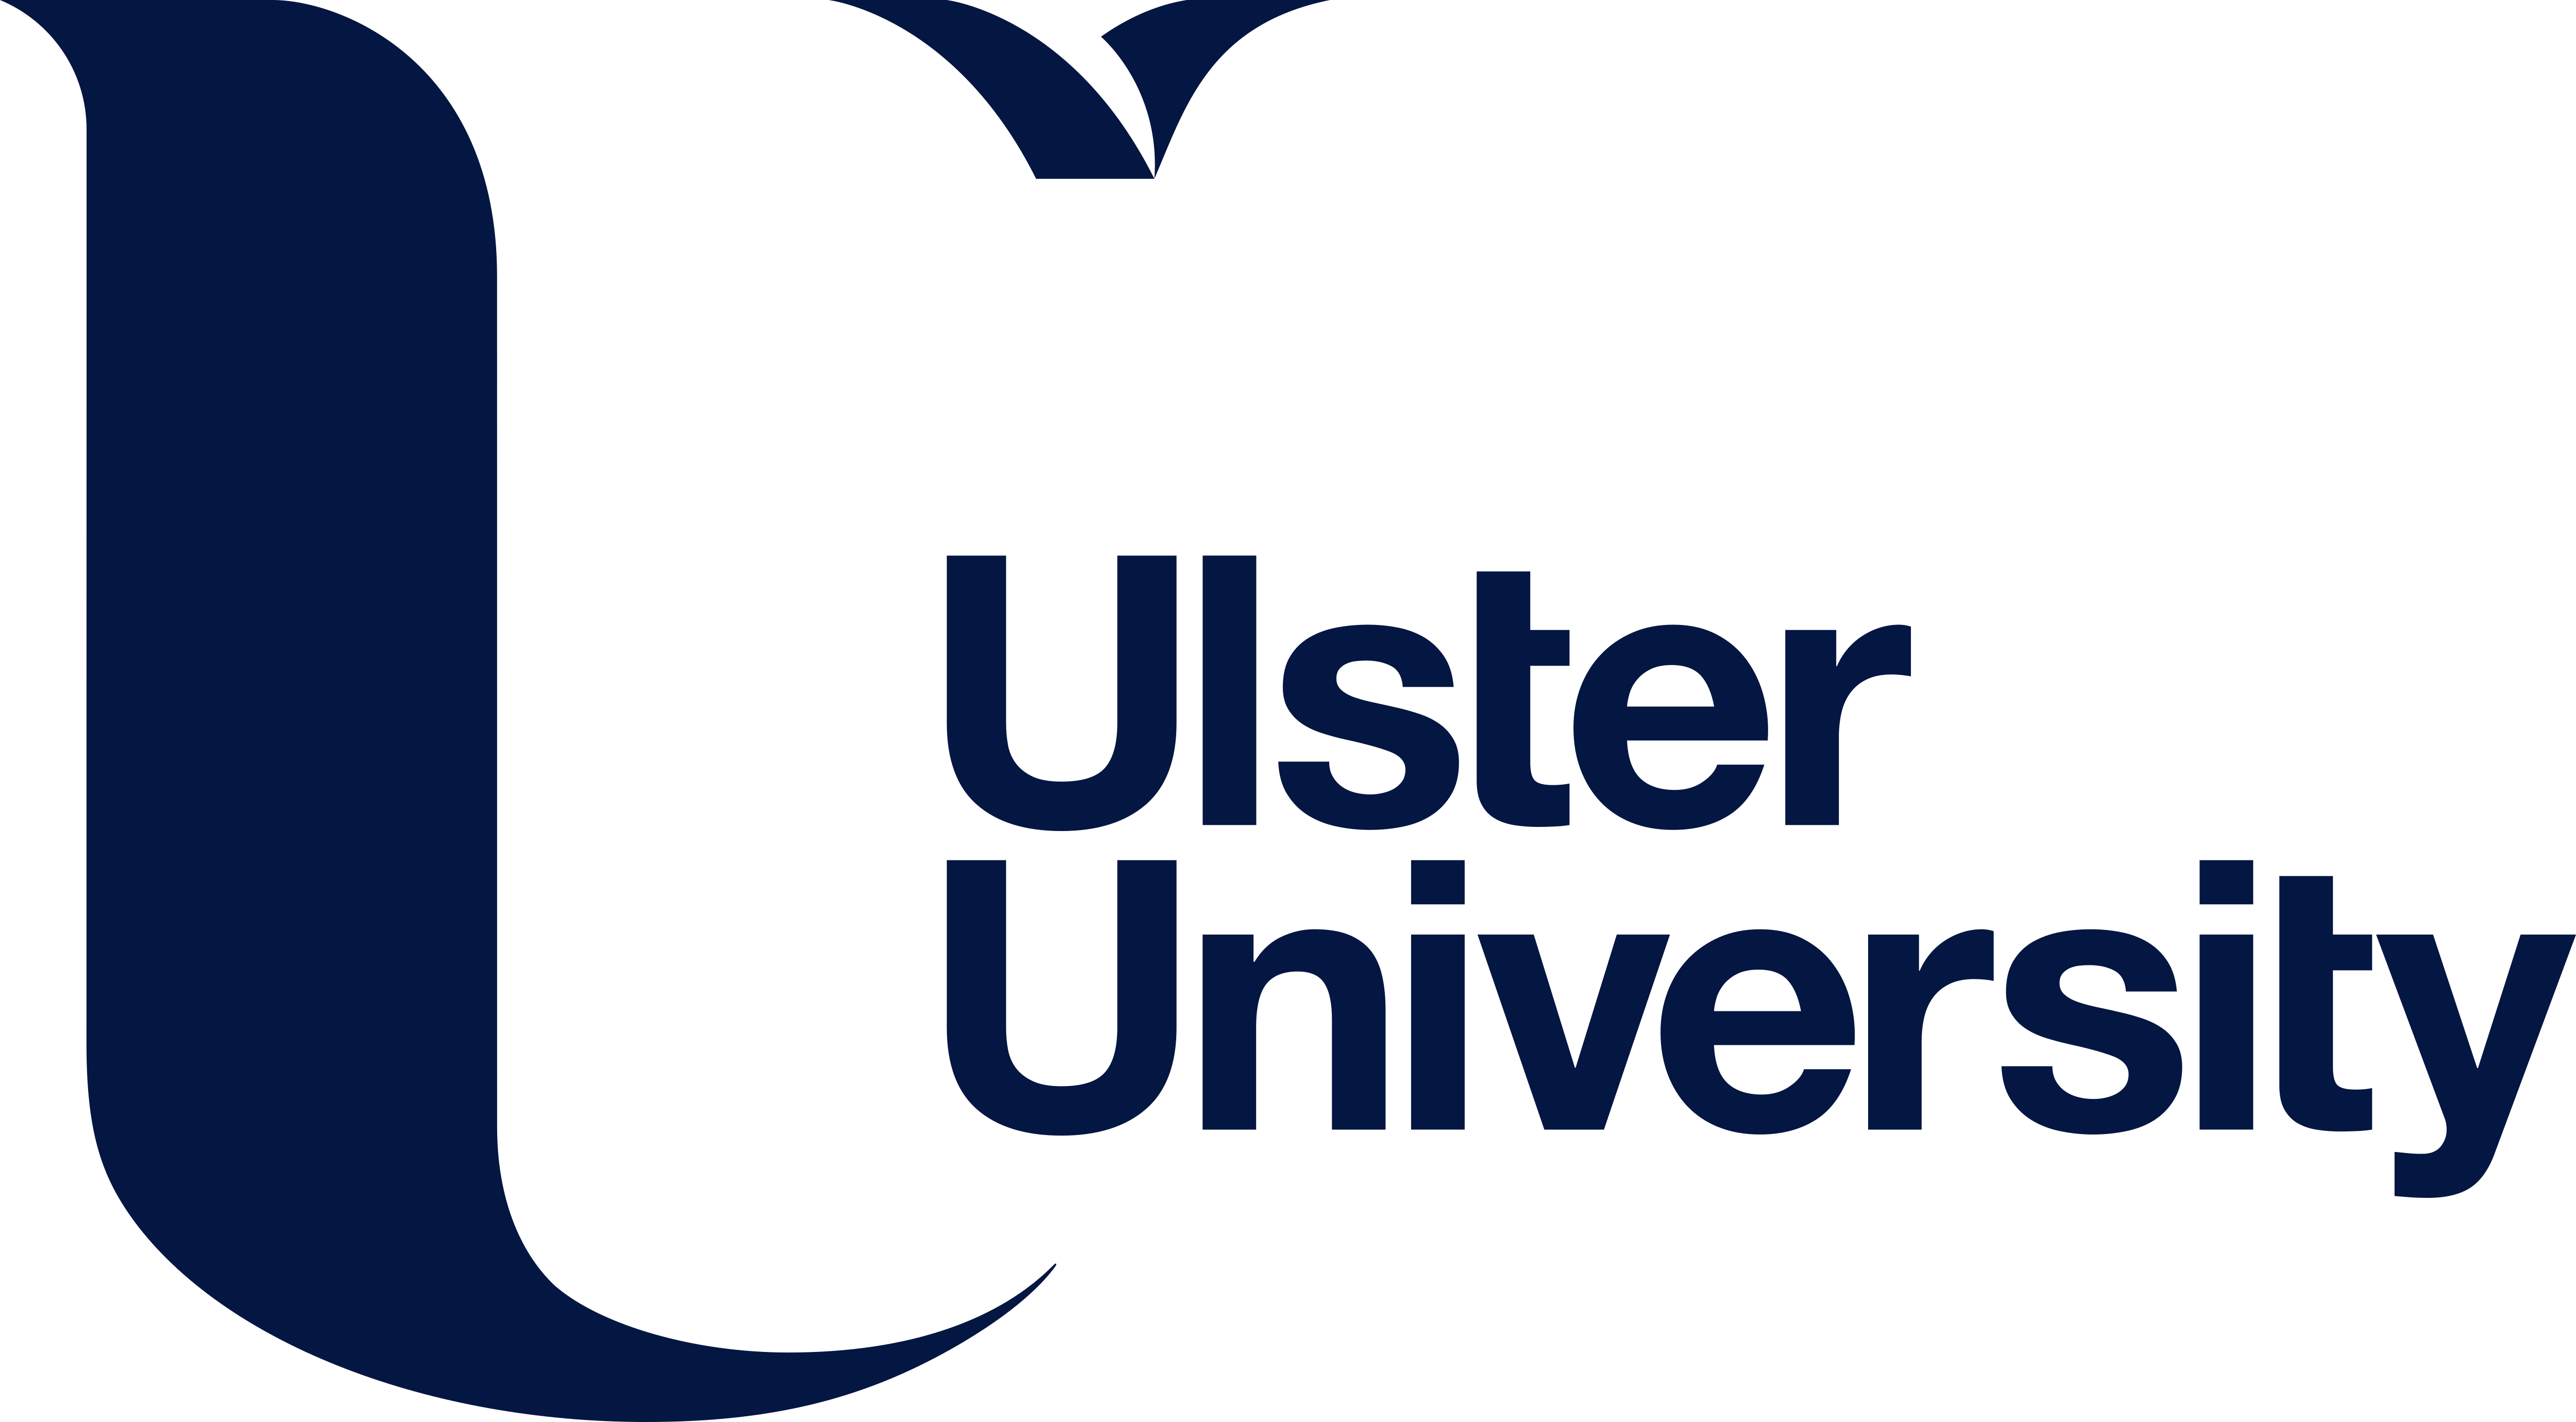 Ulster University – Logos Download